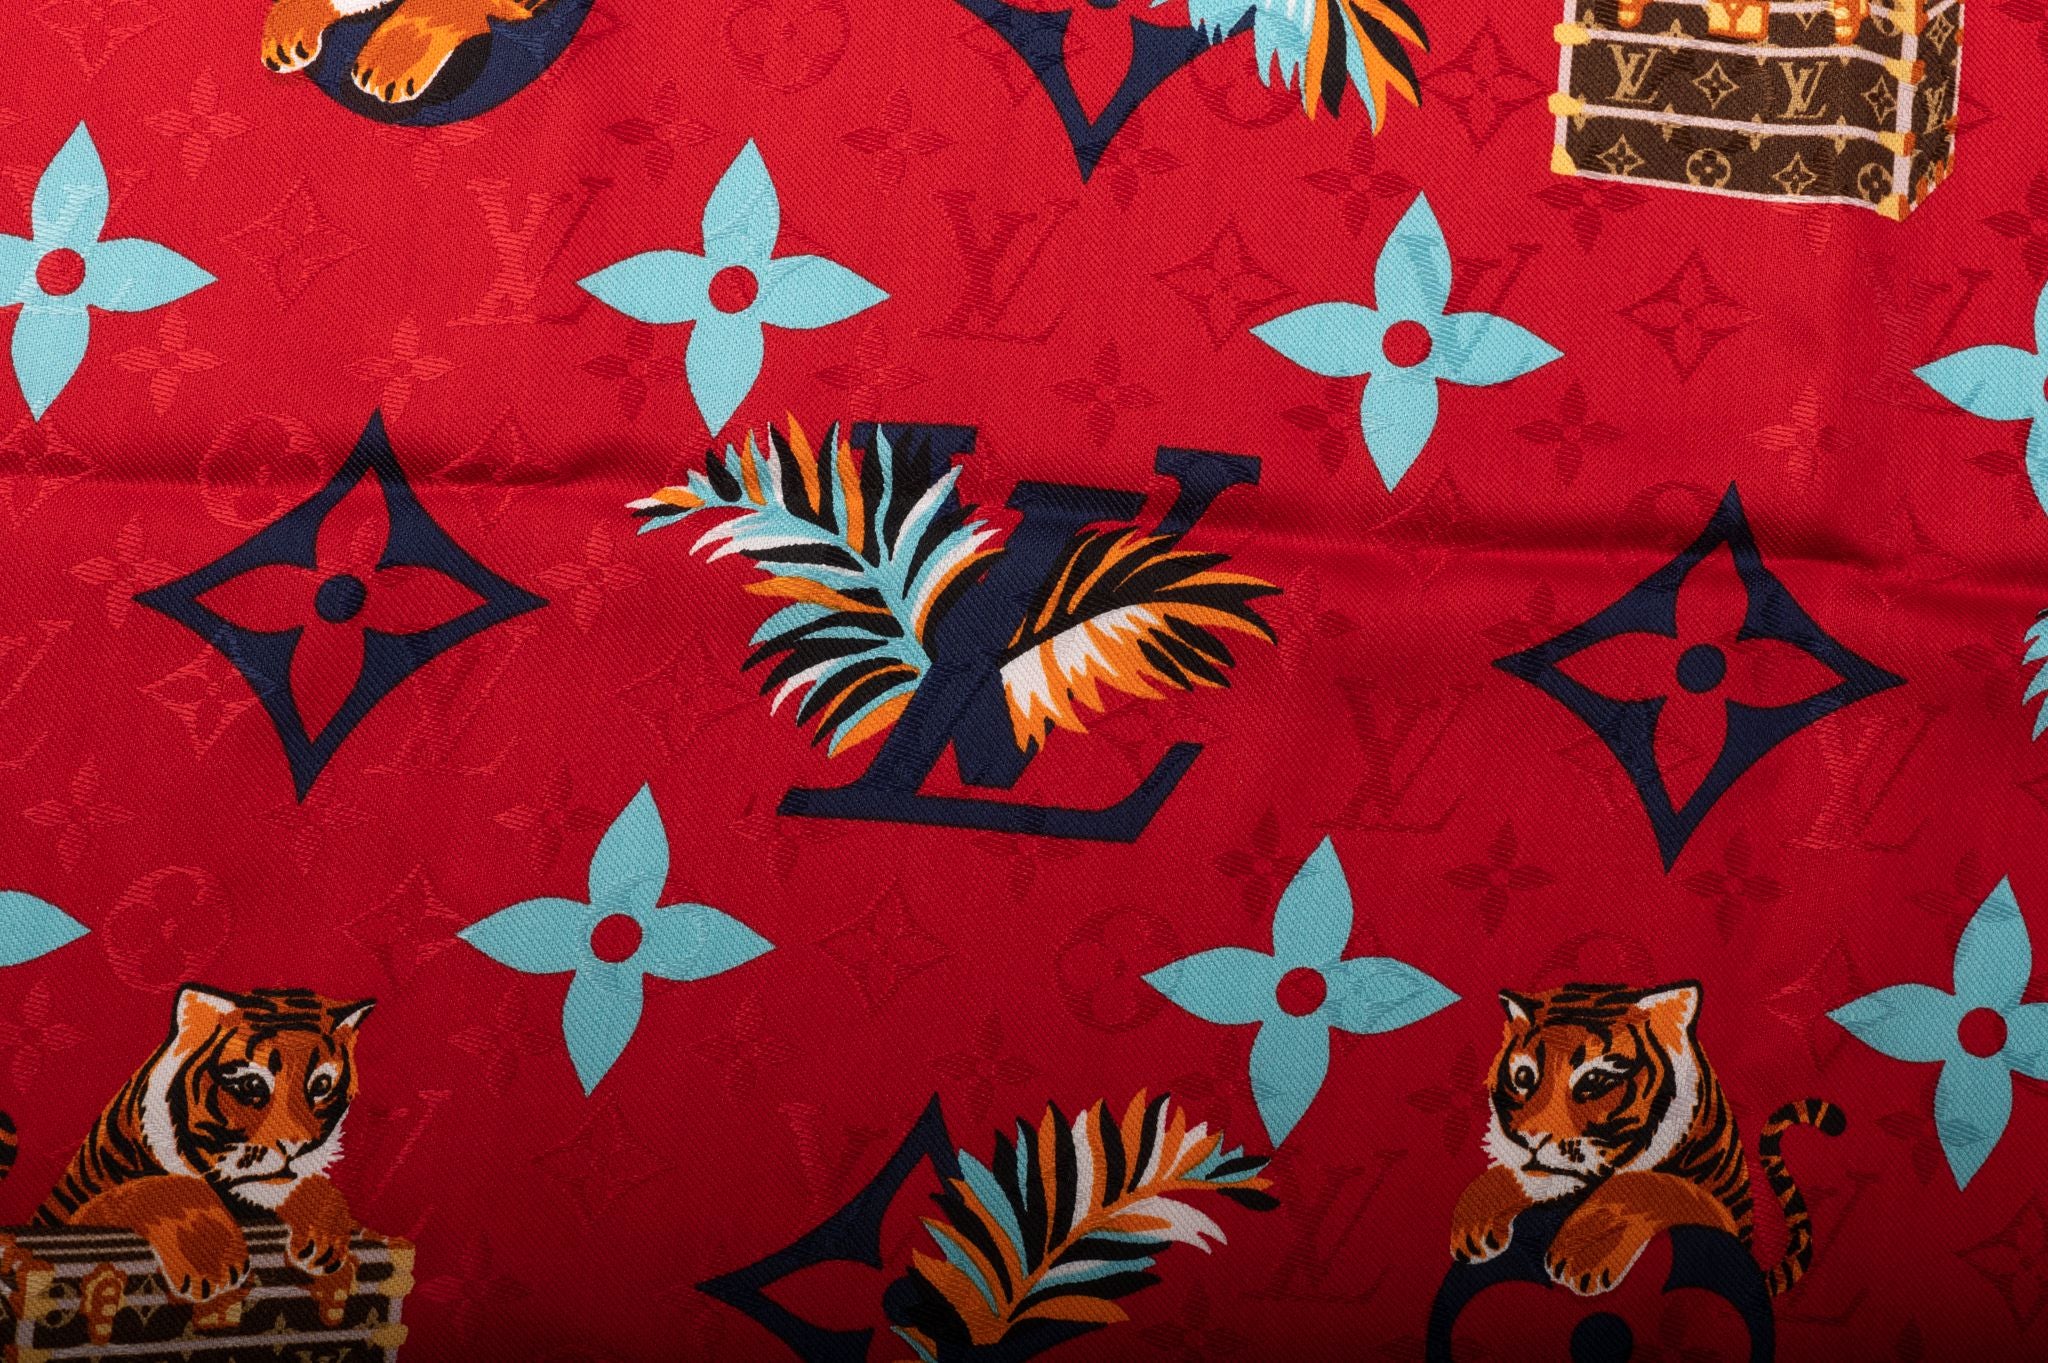 Louis Vuitton MONOGRAM Precious tiger scarf (M77386)